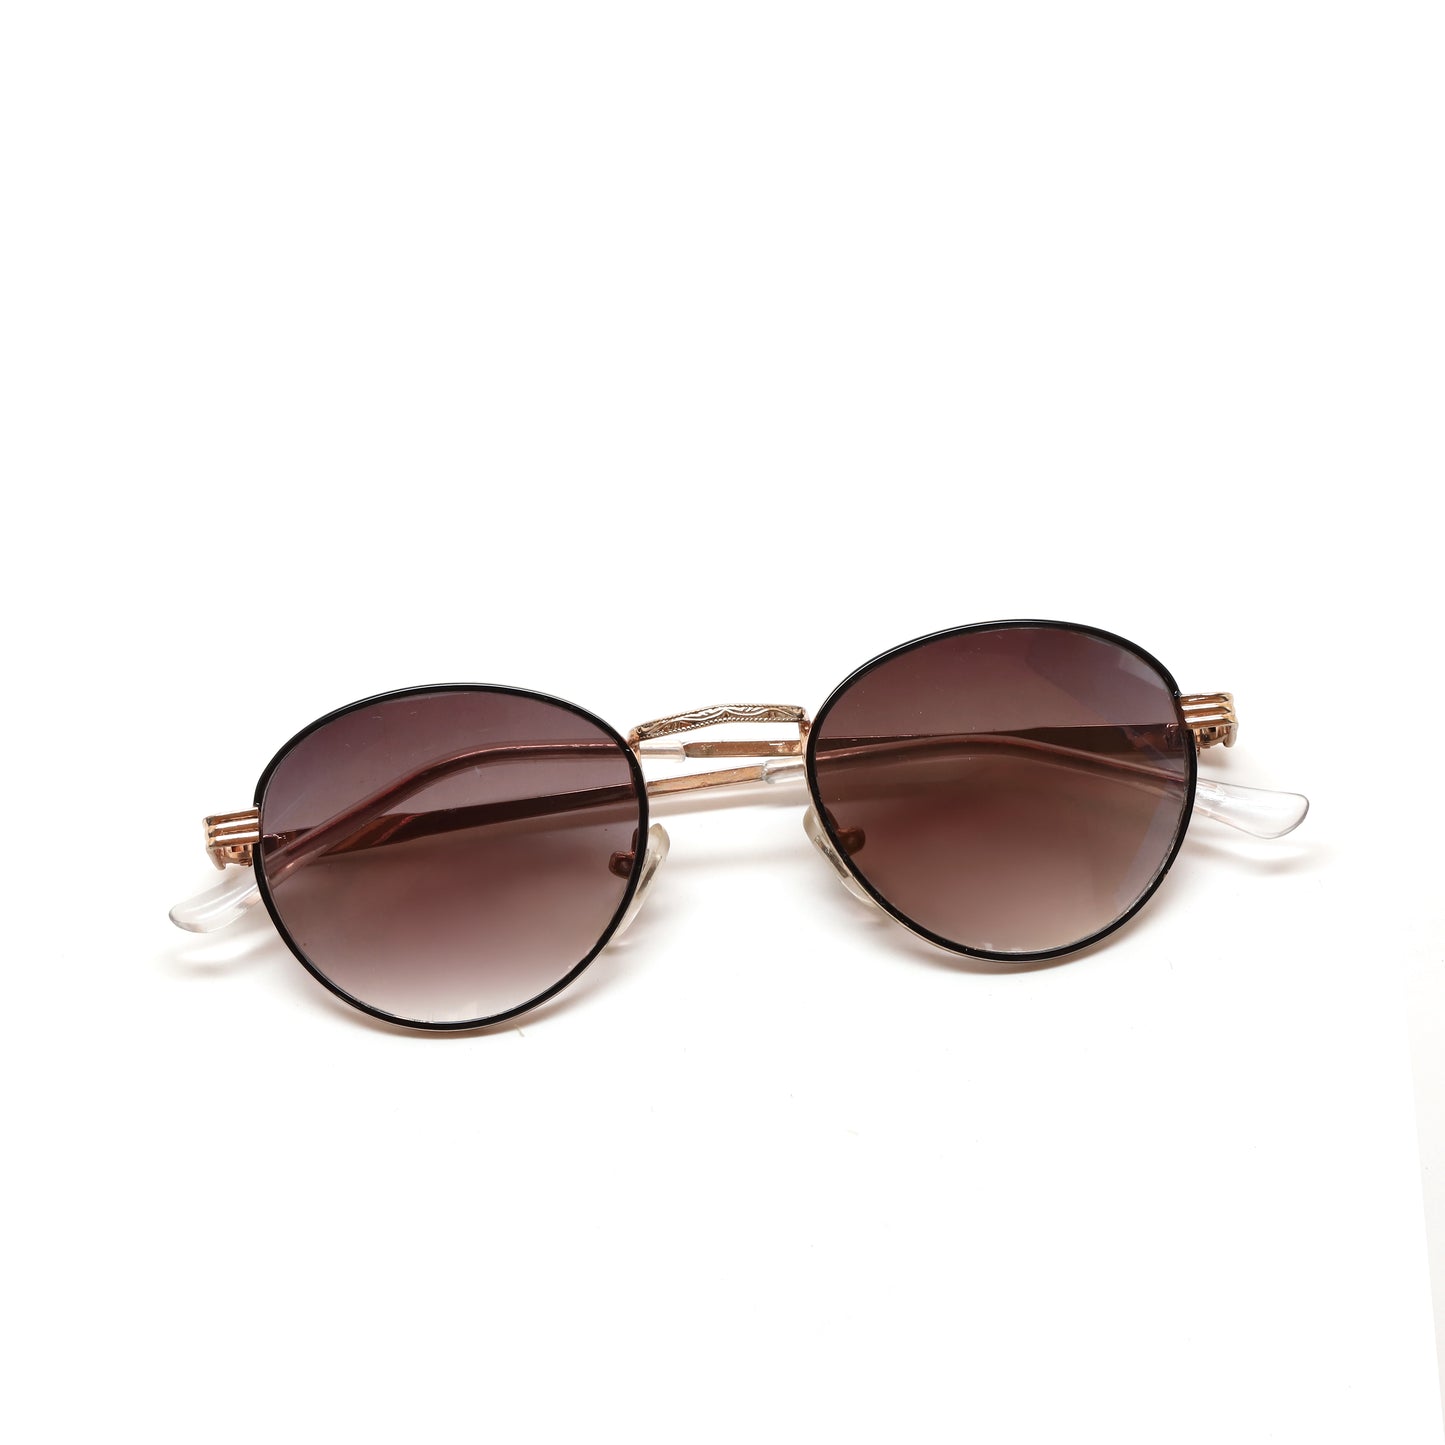 Vintage Standard Size Classic Circular Frame Deadstock Sunglasses - Light Grey